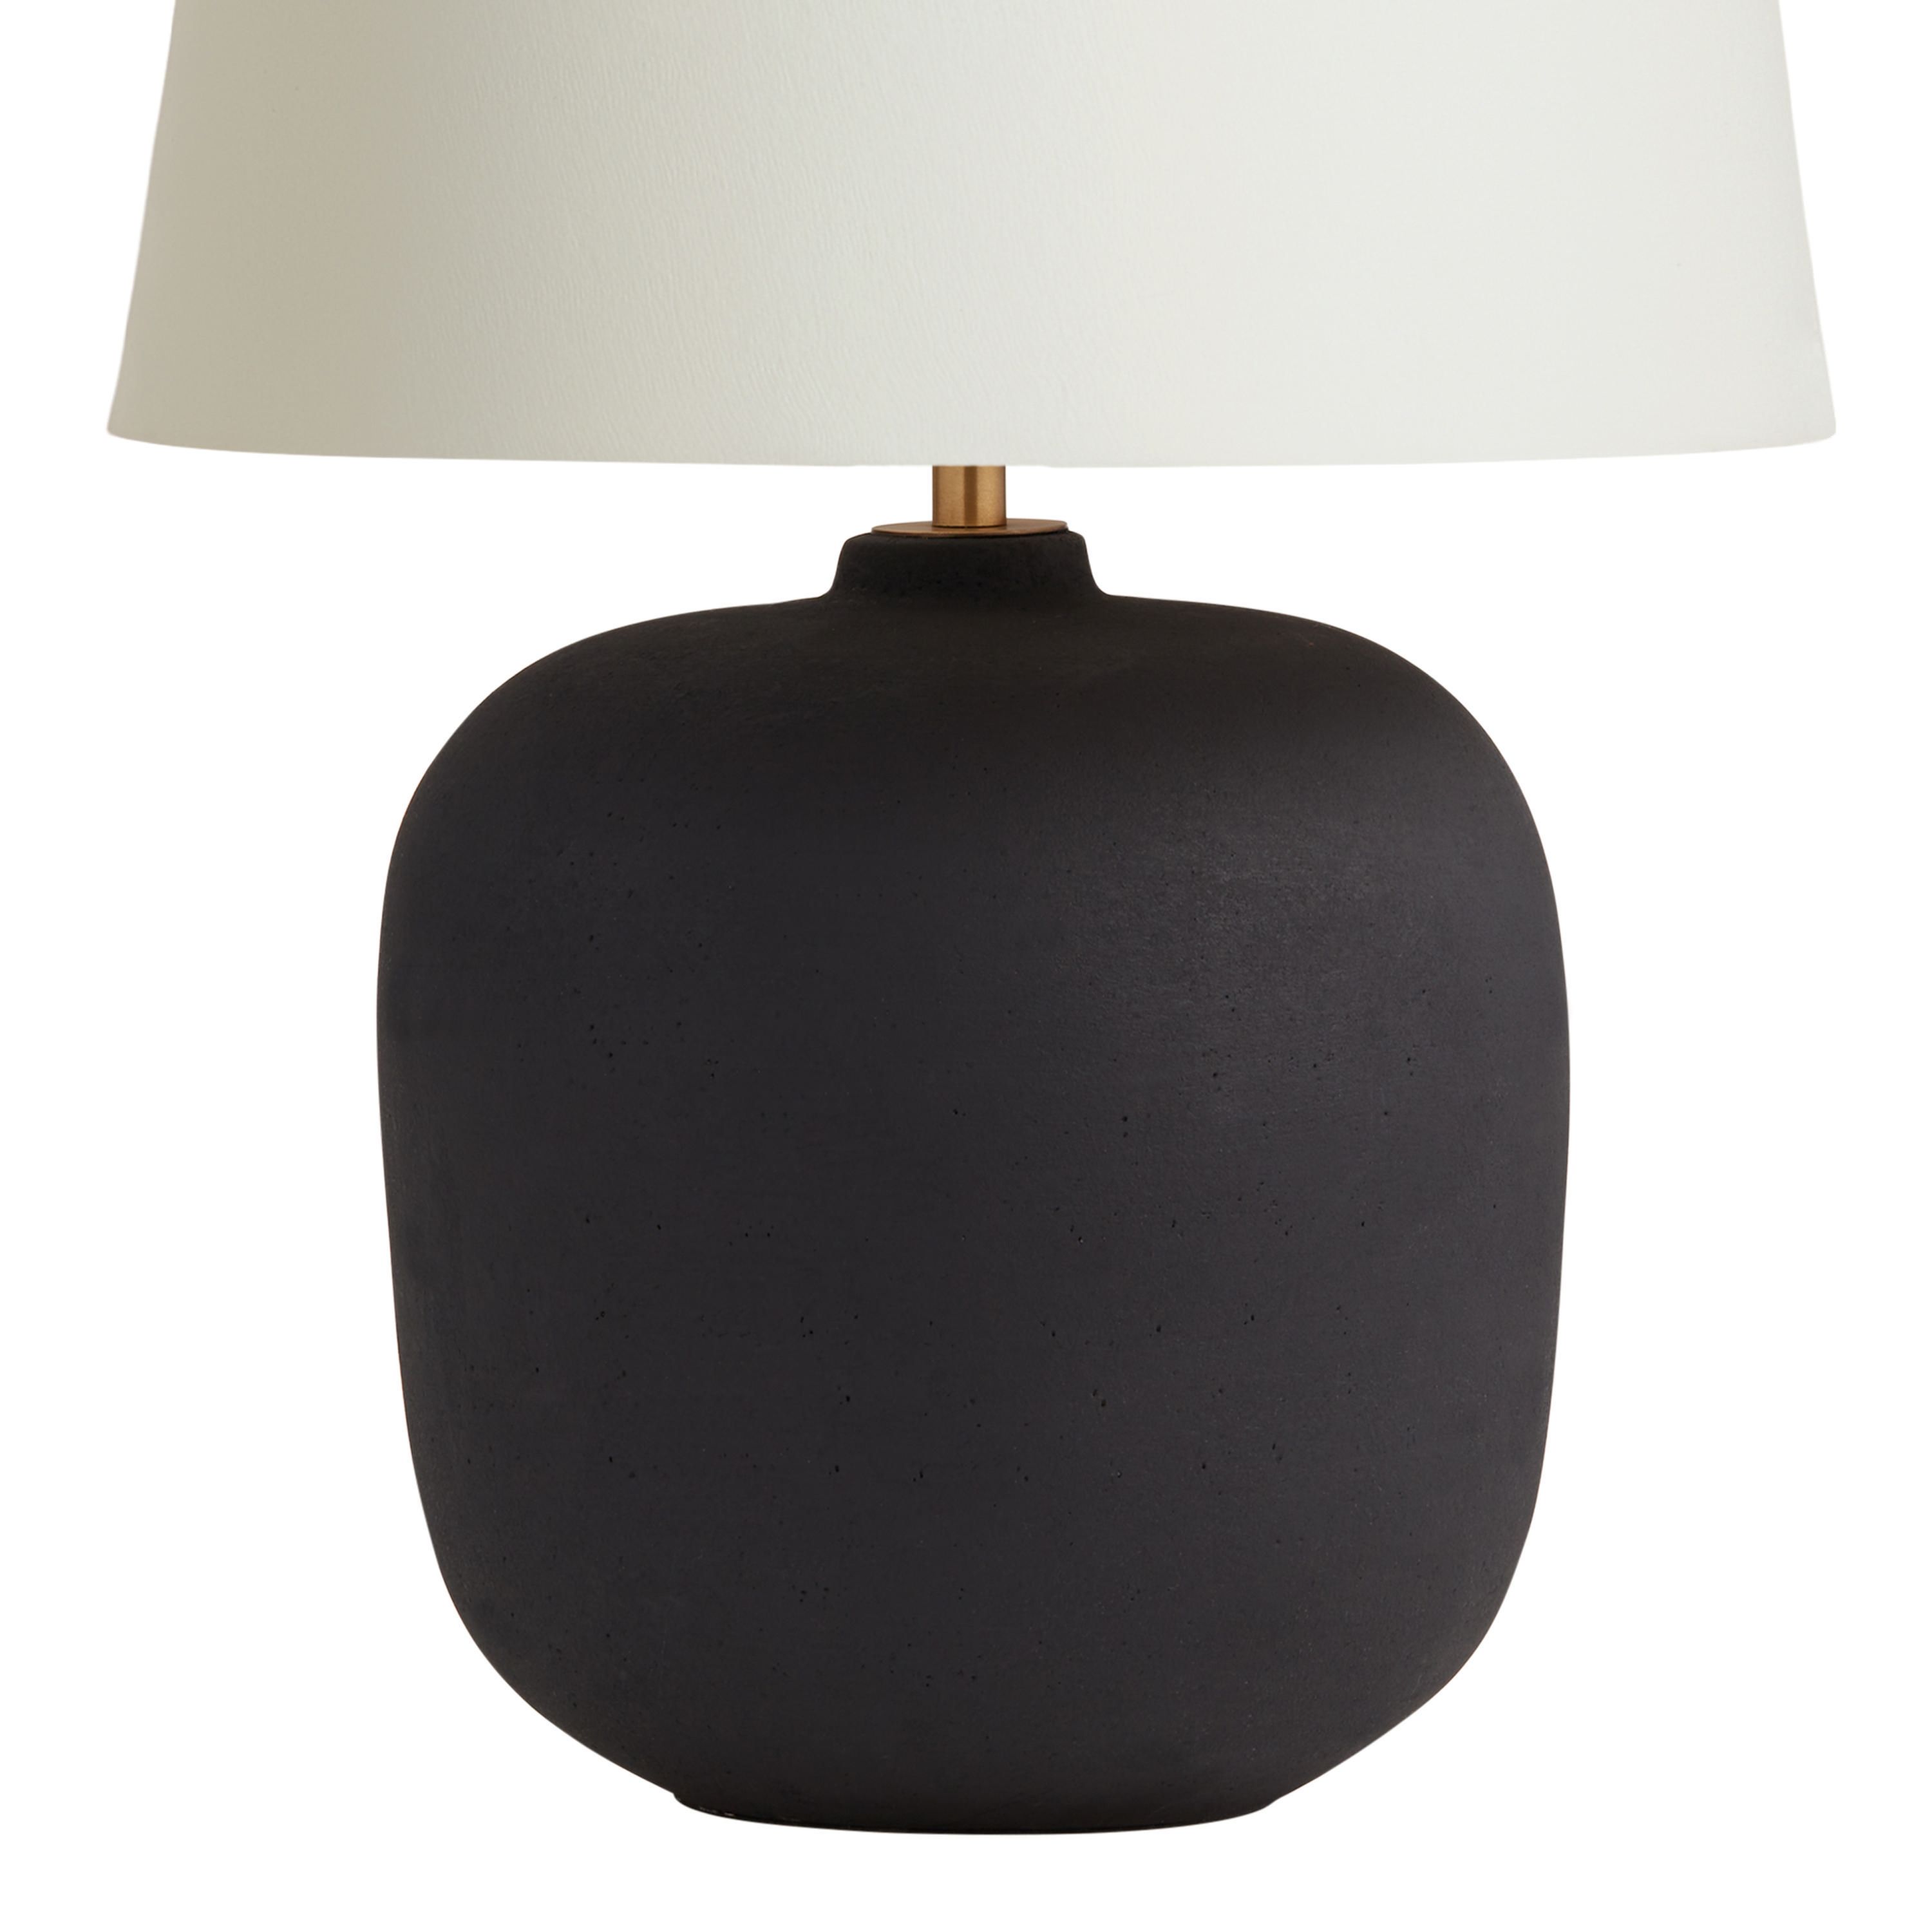 Black Ceramic Table Lamp Base | World Market